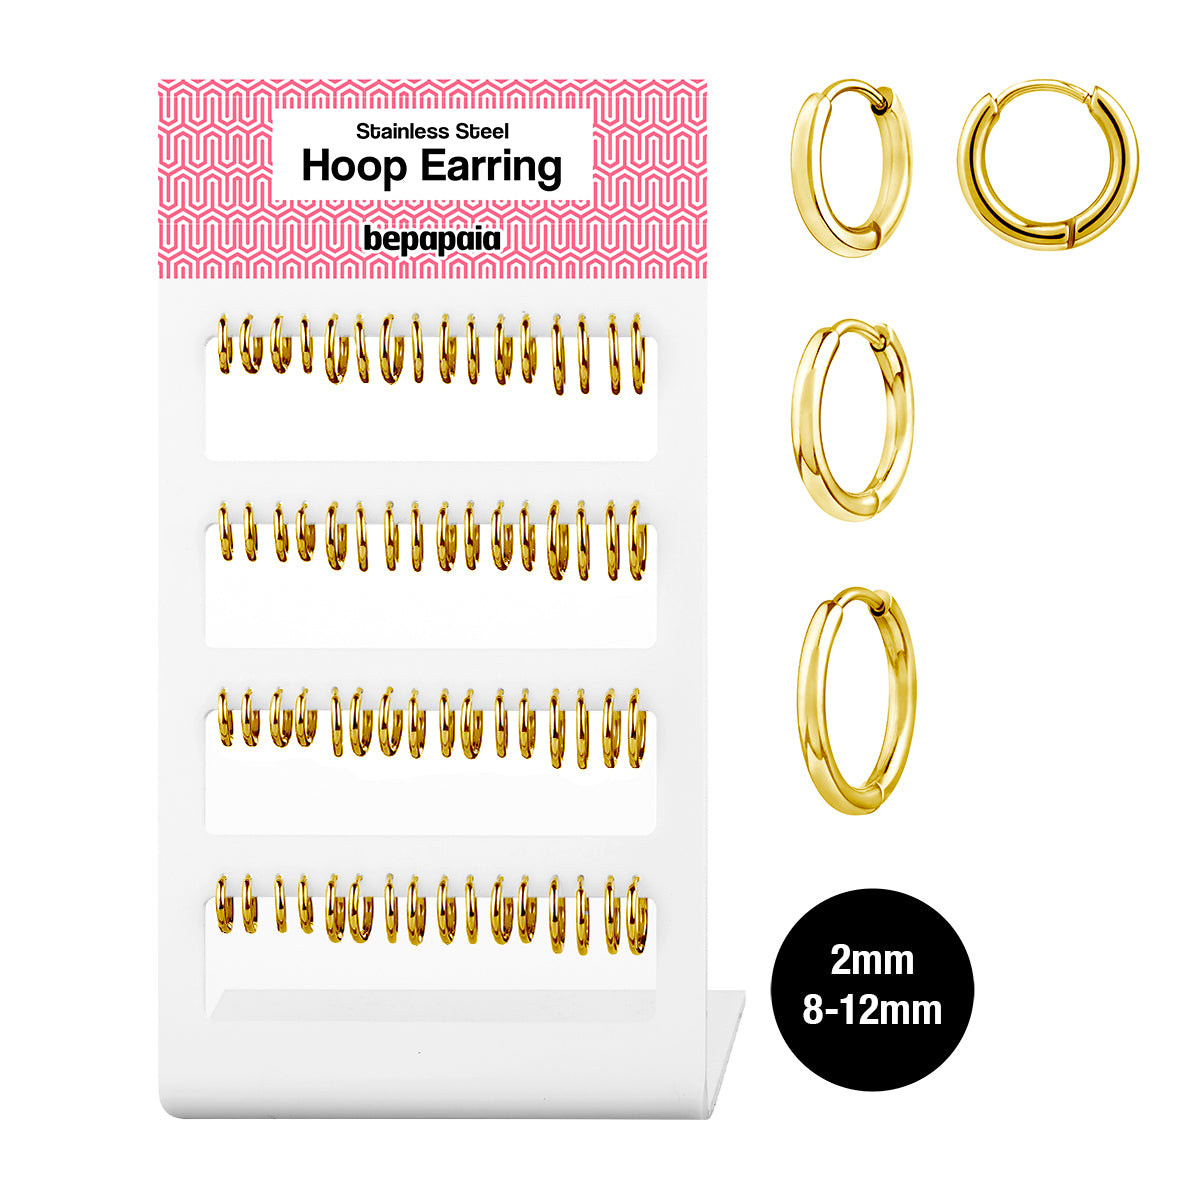 2mm golden steel hoop earring (small sizes: 8-12mm)